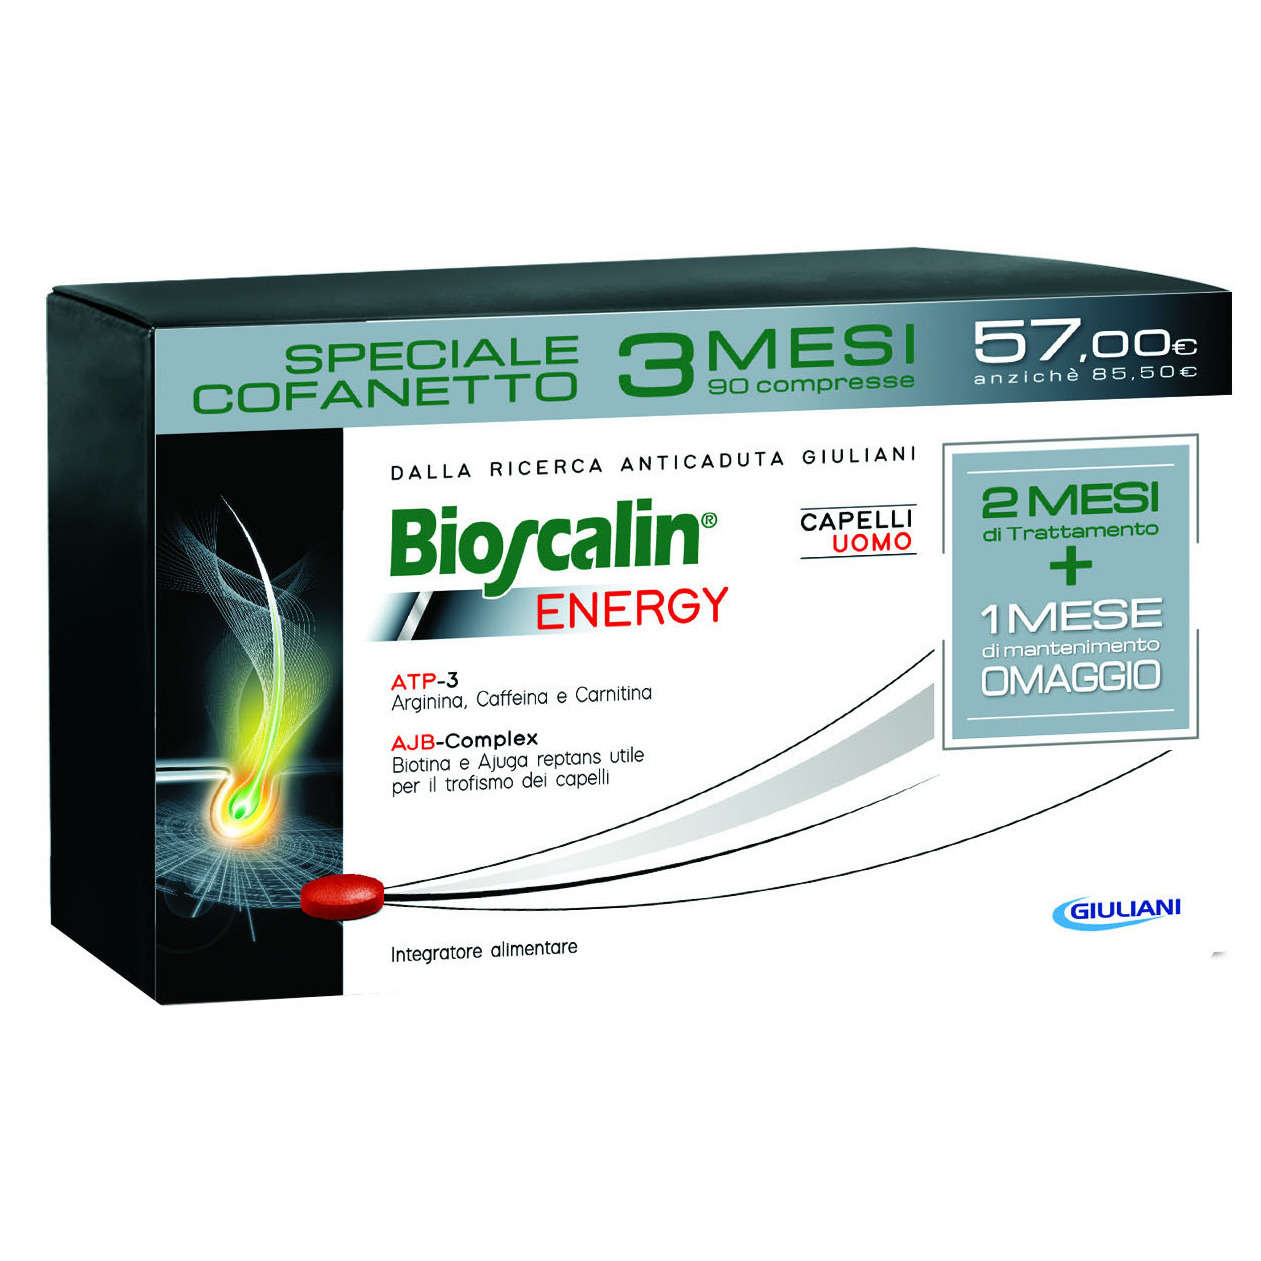 Bioscalin - Energy Capelli Uomo - Offerta 2 mesi +1 